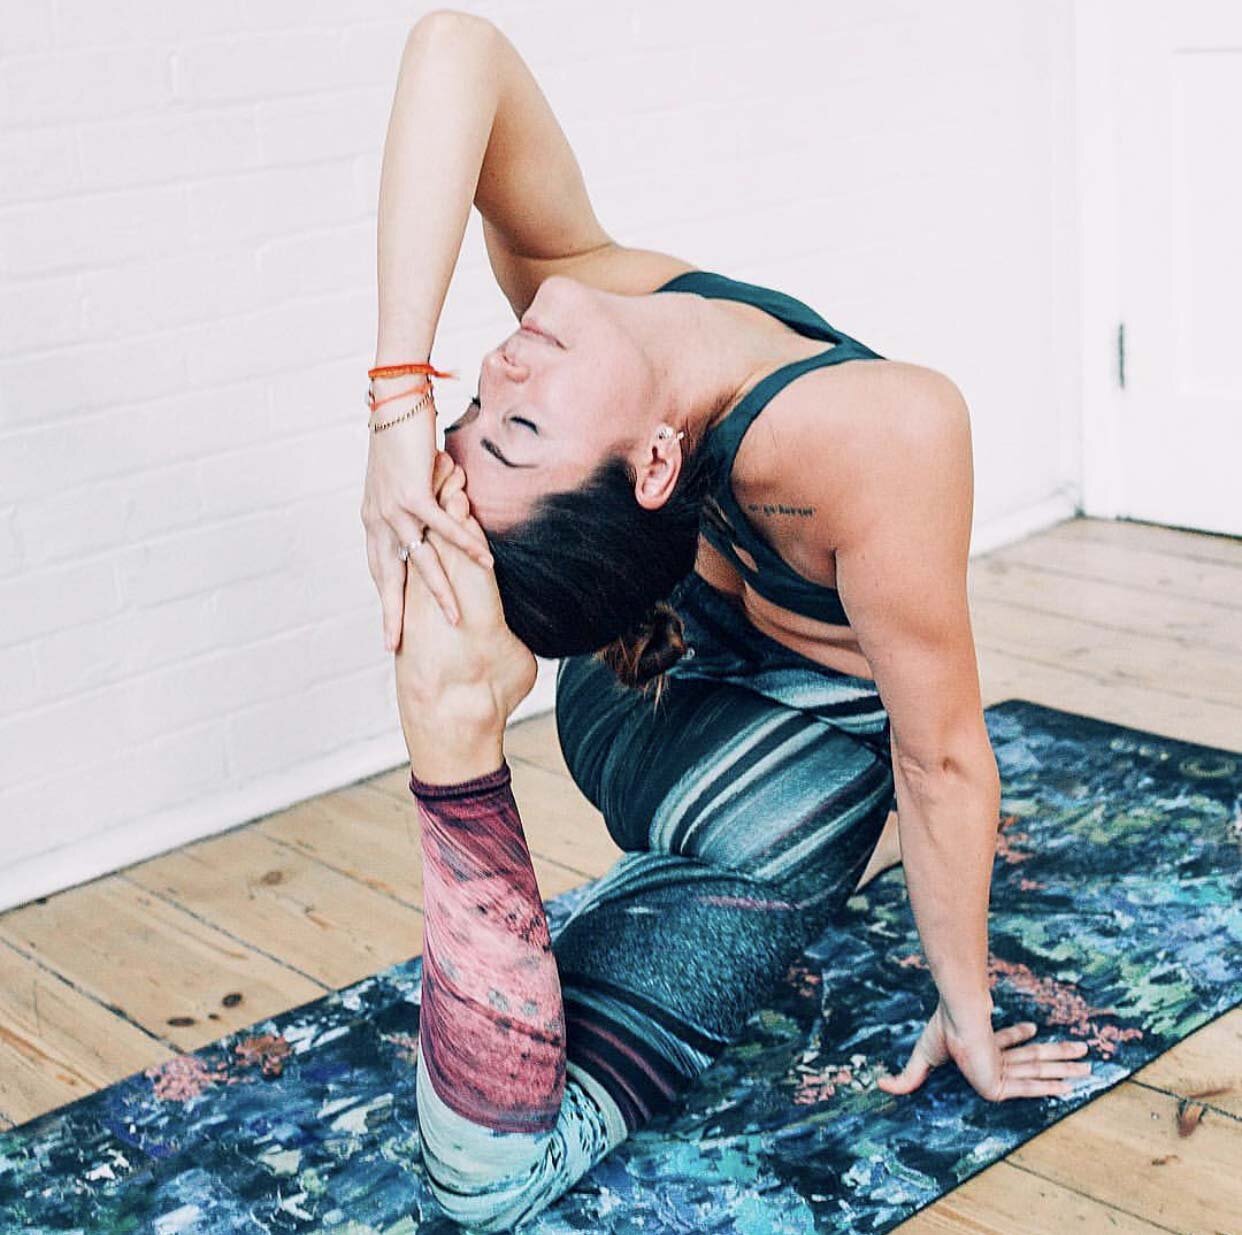 @mindfulsonder Yoga teacher Marial Whitmond, showing us how it’s done!